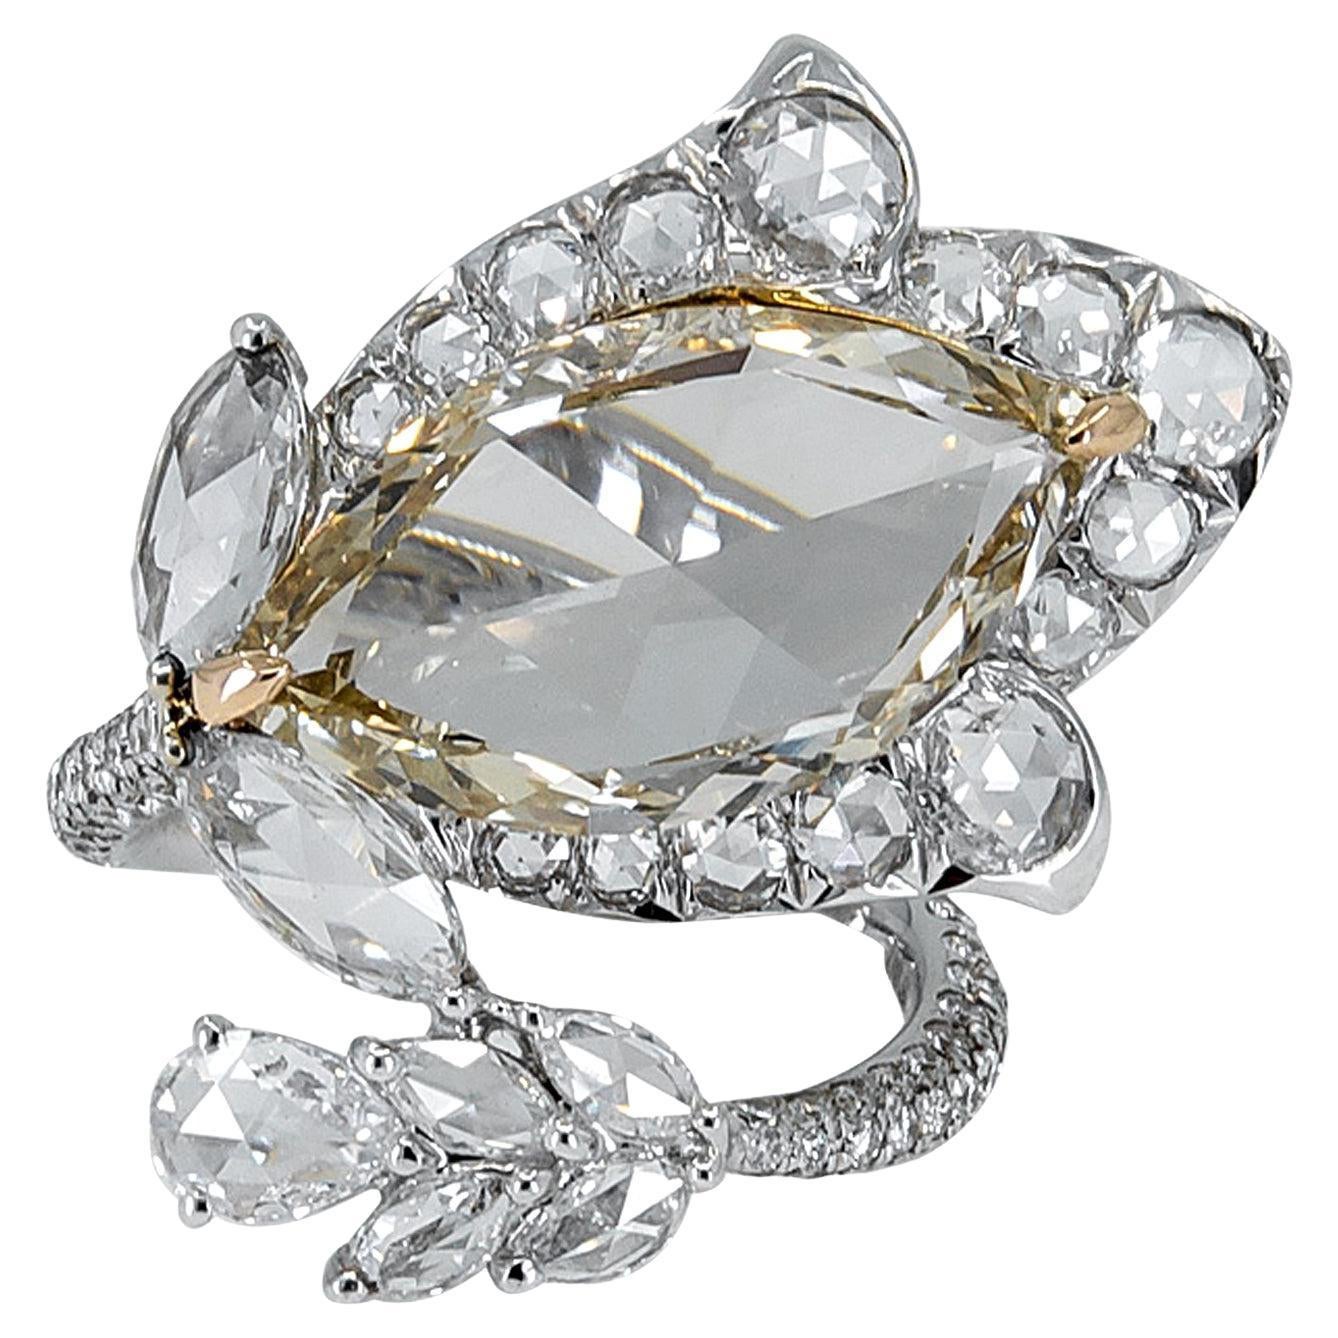 Spectra Fine Jewelry GIA zertifiziert 5,04 Karat Fancy Brown-Yellow Diamond Ring